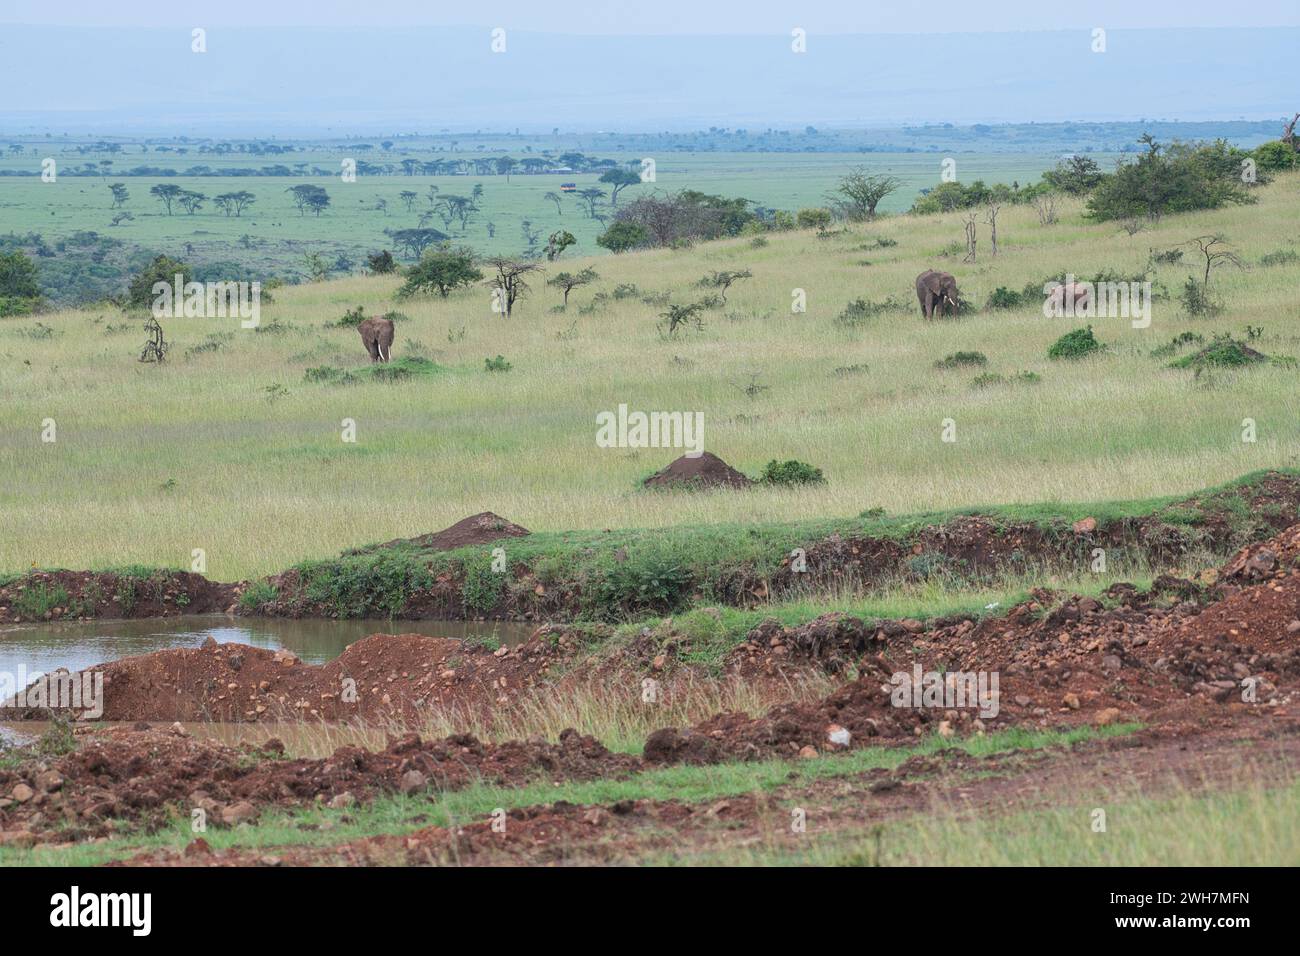 Olare Motorogi Conservancy, Masai Mara, Kenya, landscape with three African elephants, with green vegetation following rains Stock Photo